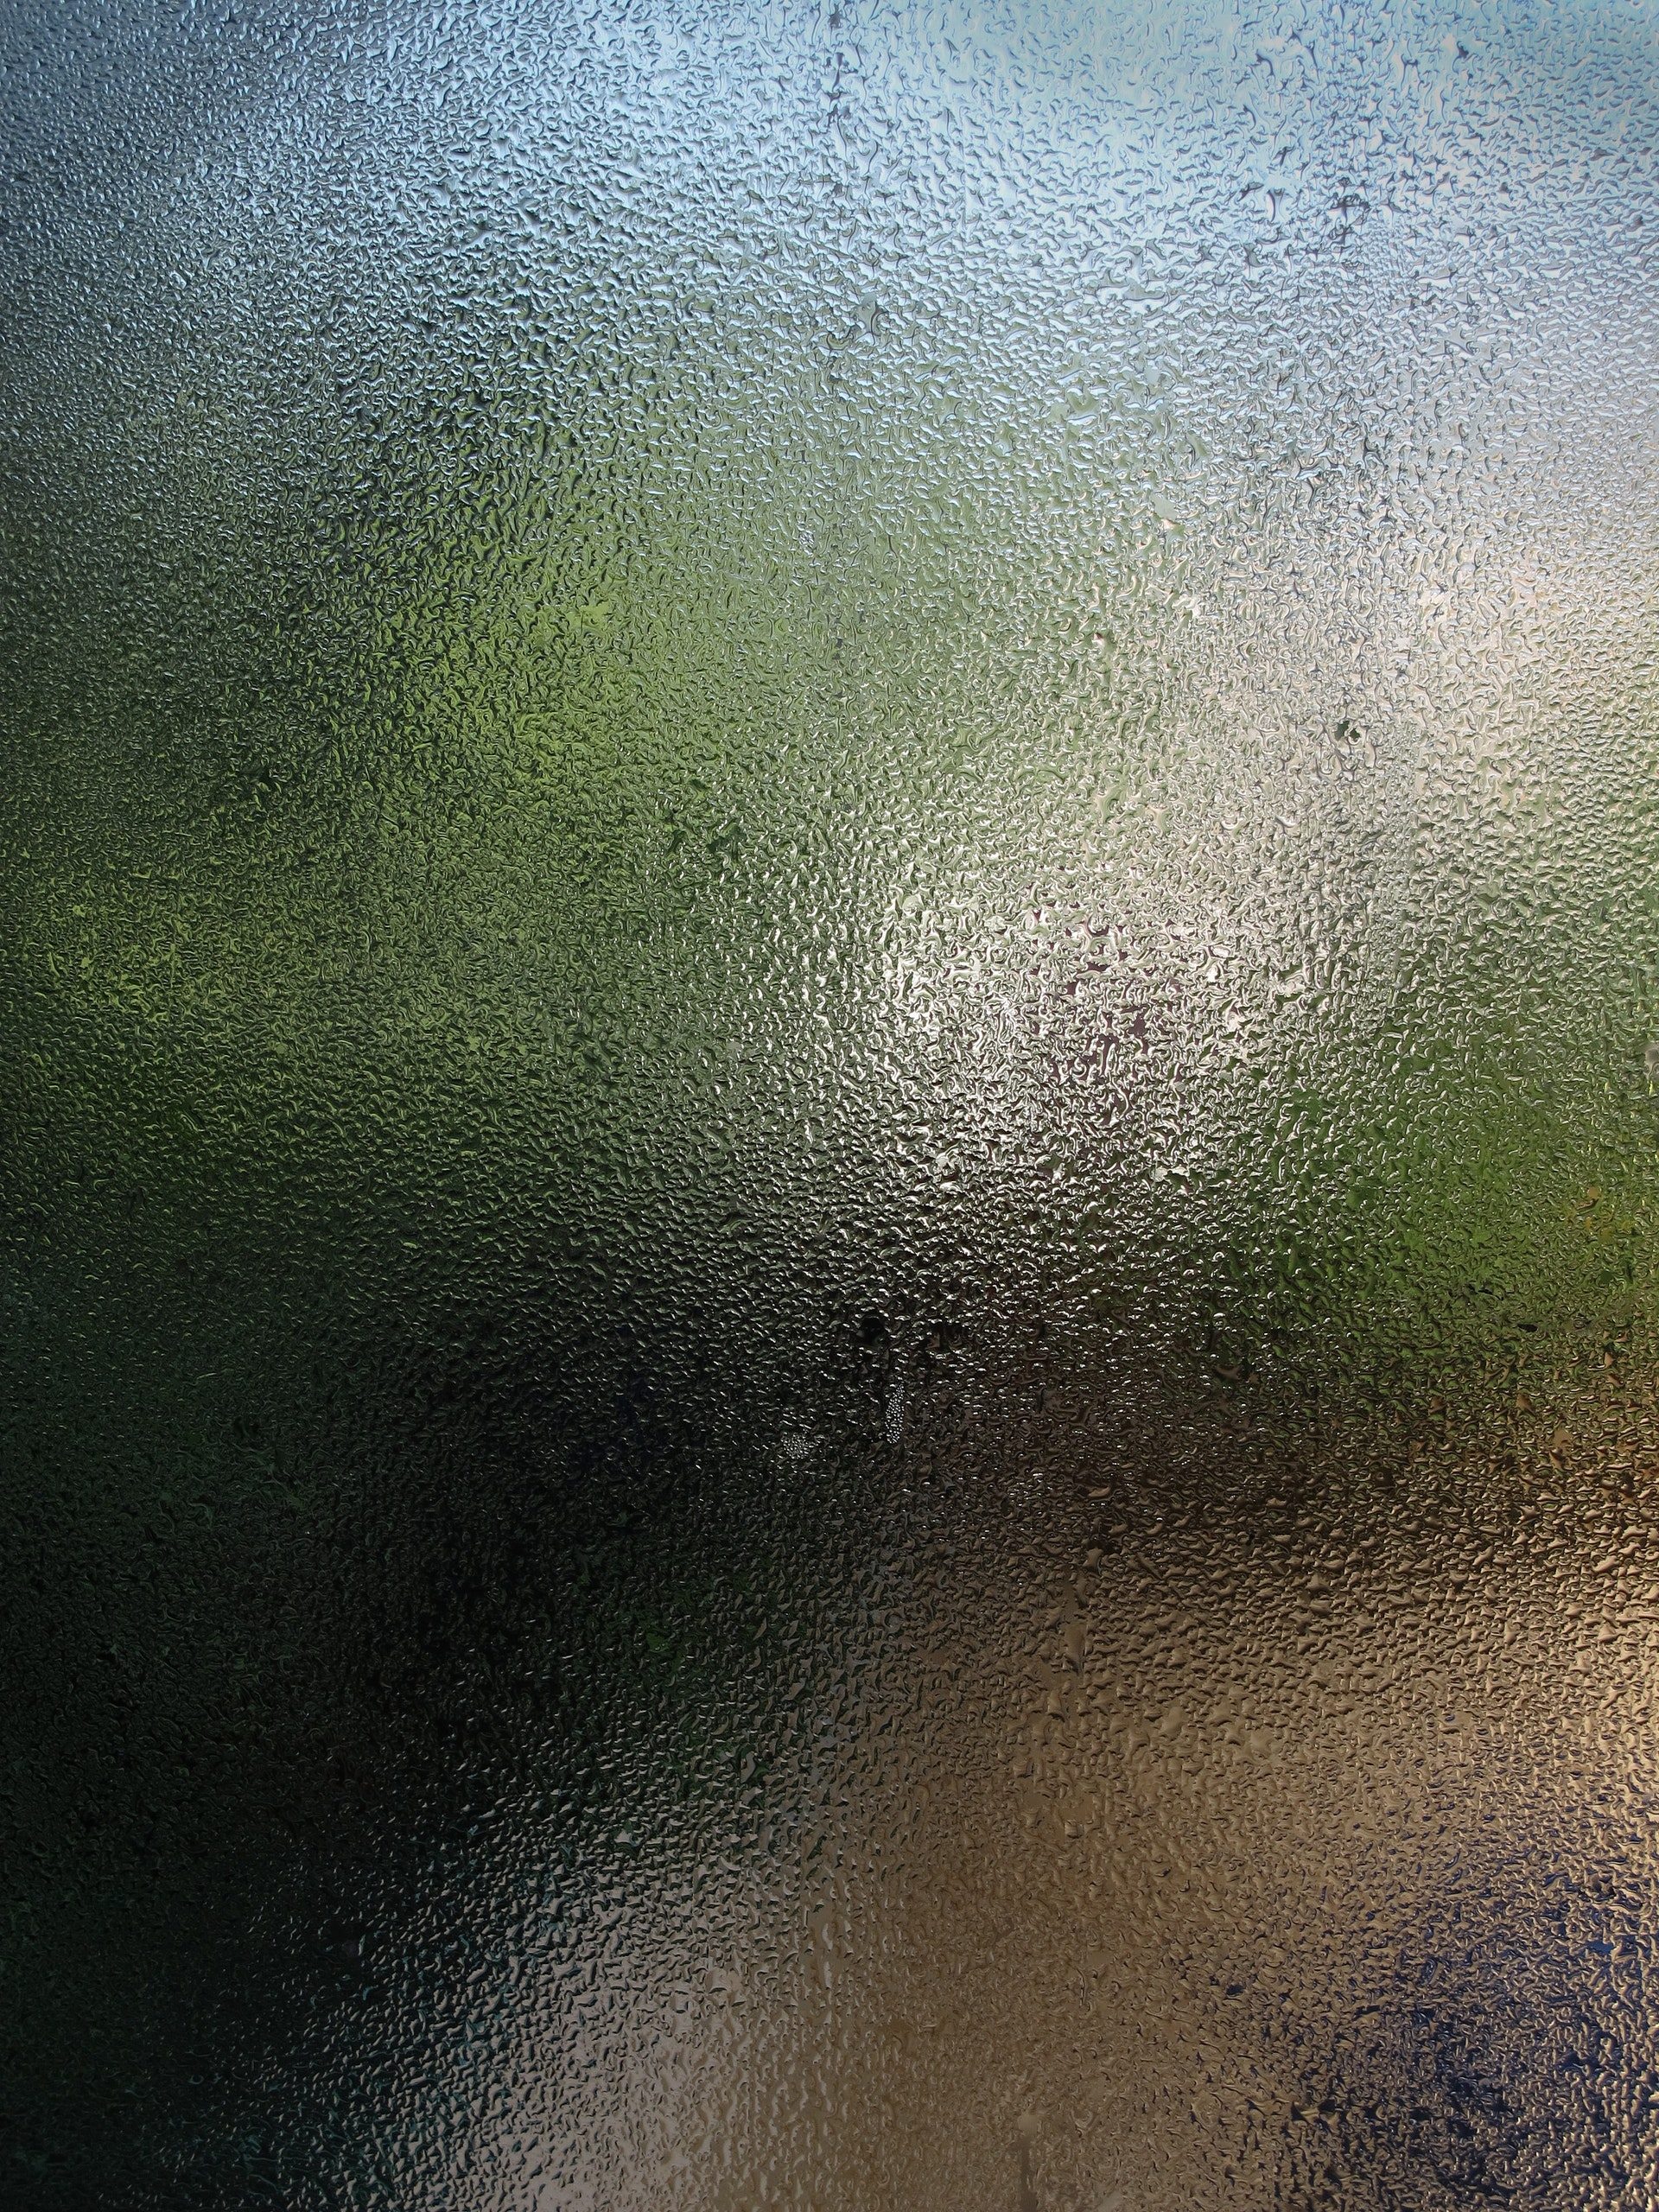 close-up-dew-glass-moisture-459277